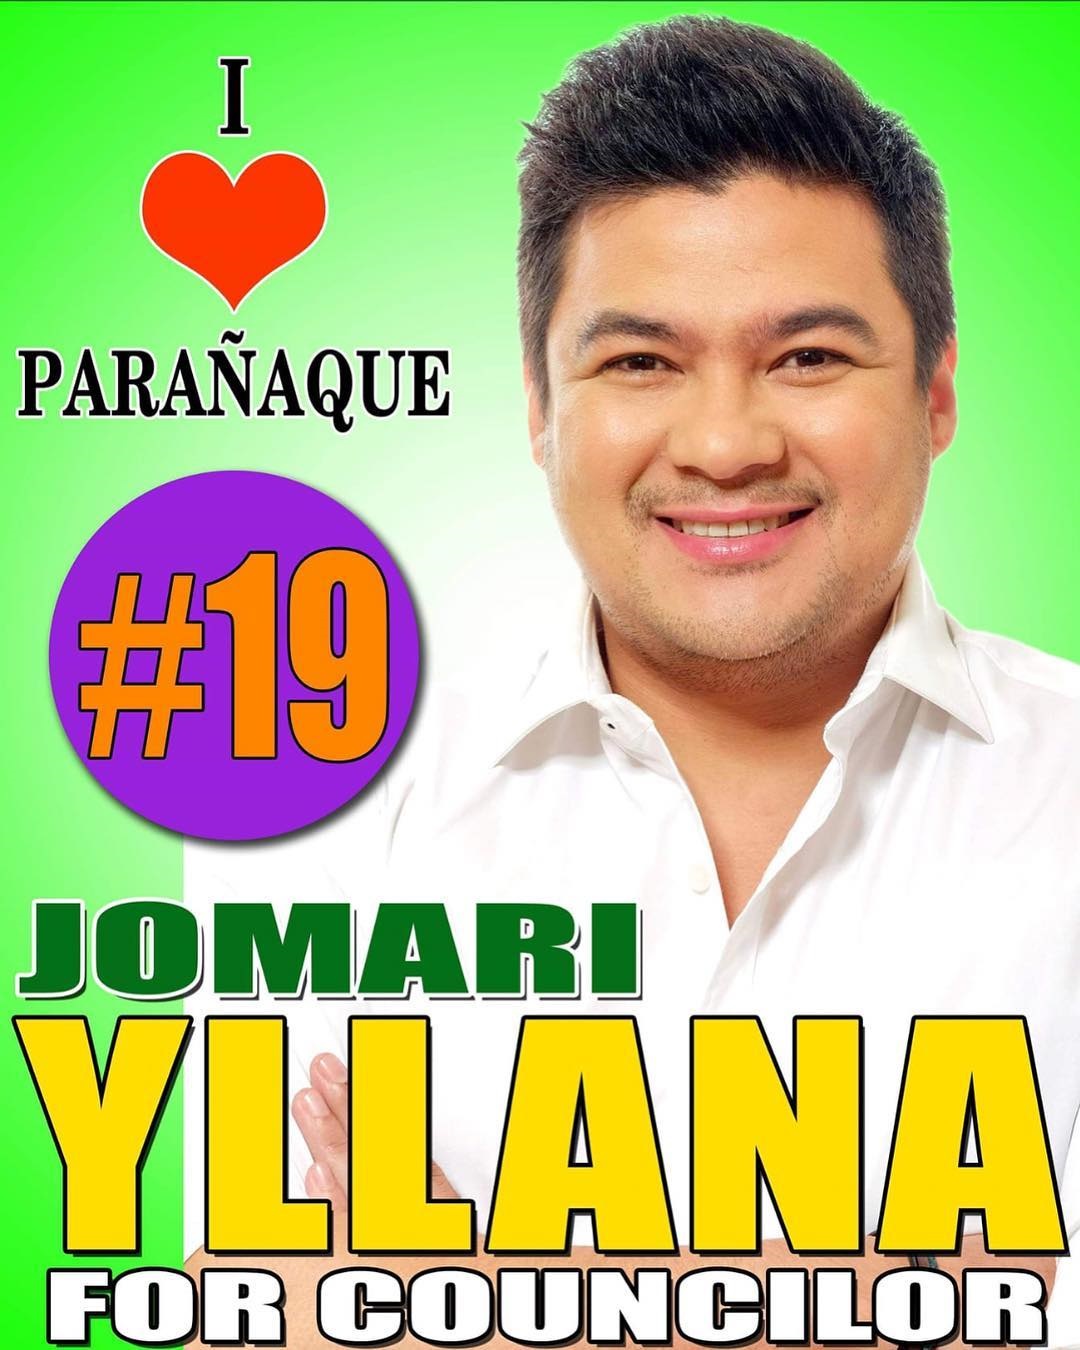 Jomari Yllana campaign poster